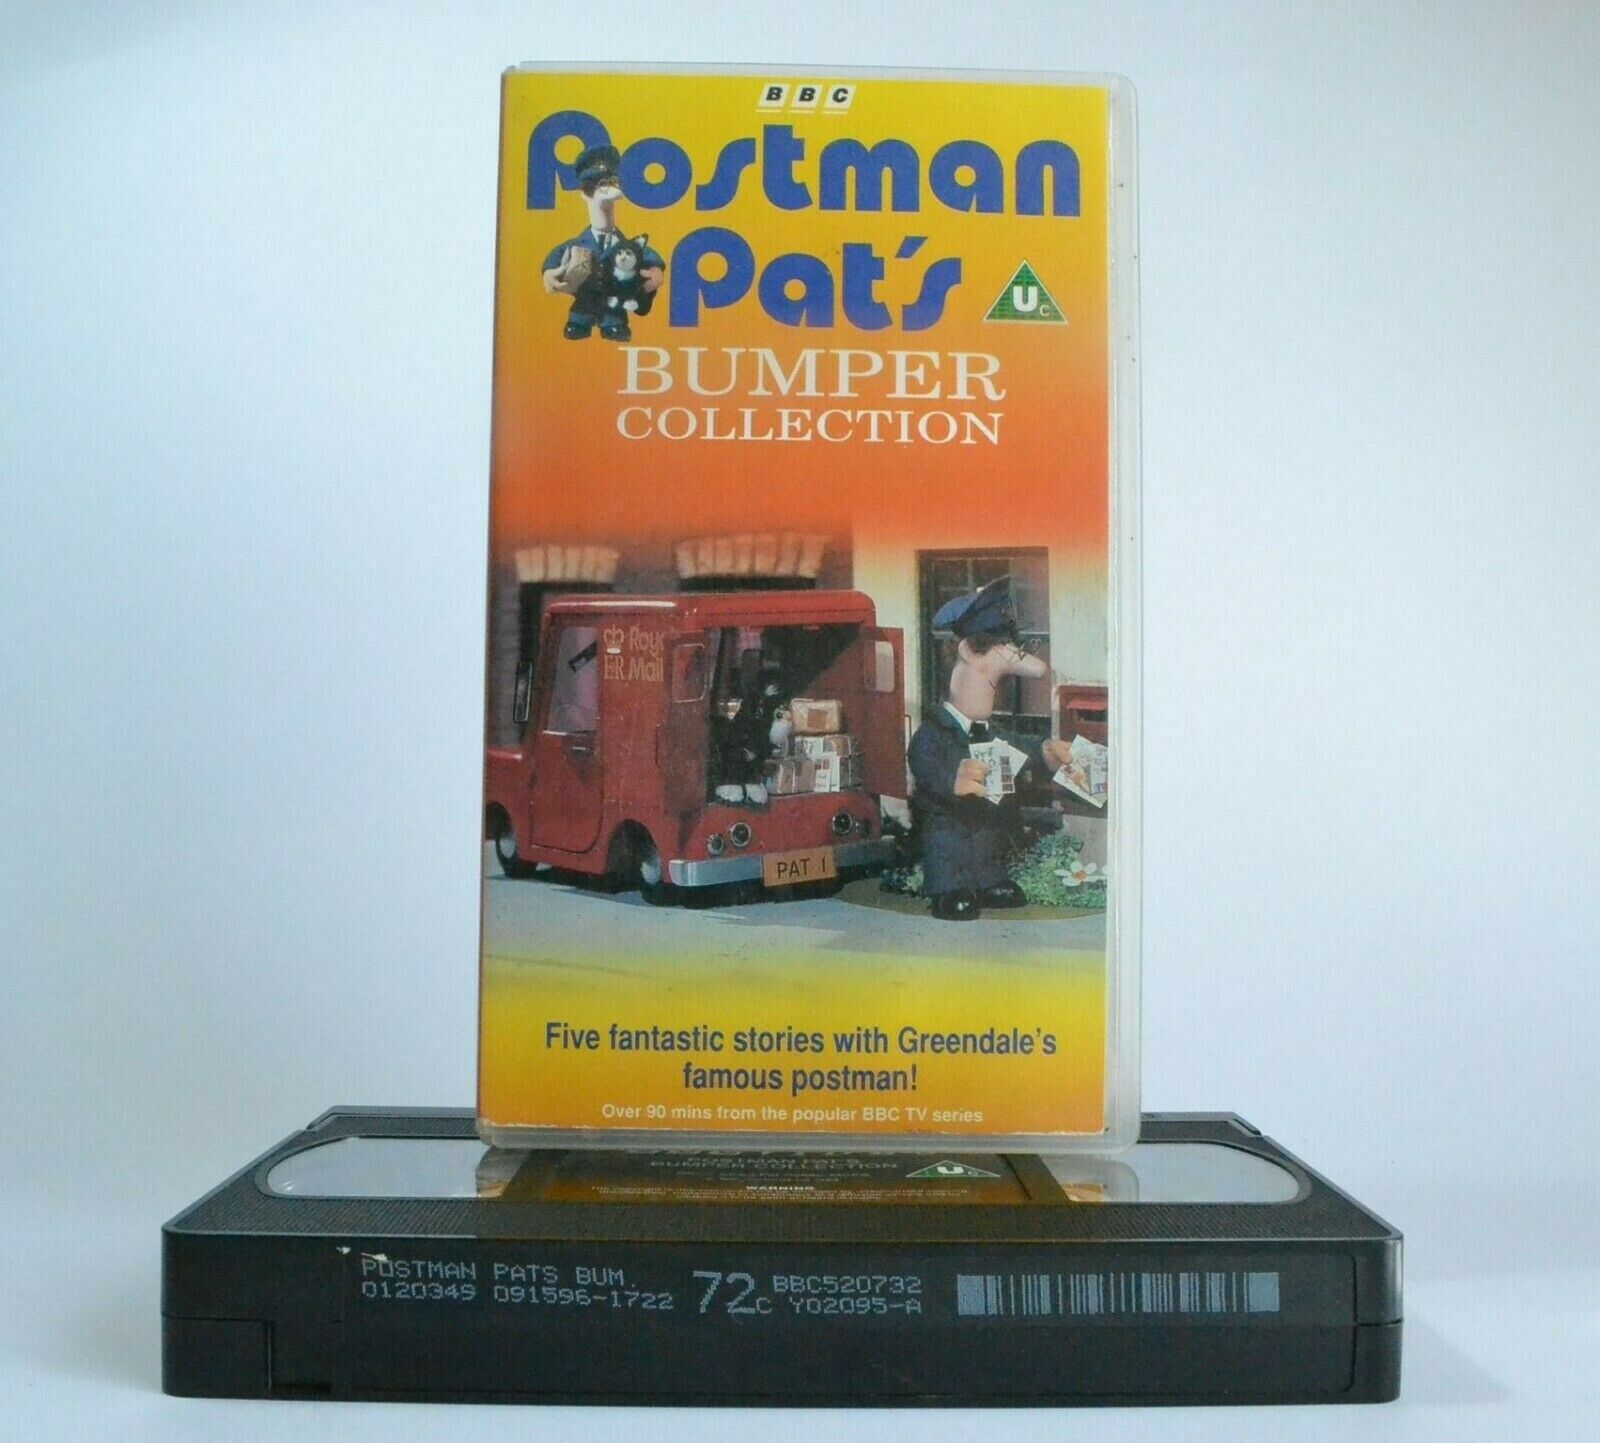 Postman Pat: Bumper Collection - BBC Children's Animation - Educational - VHS-